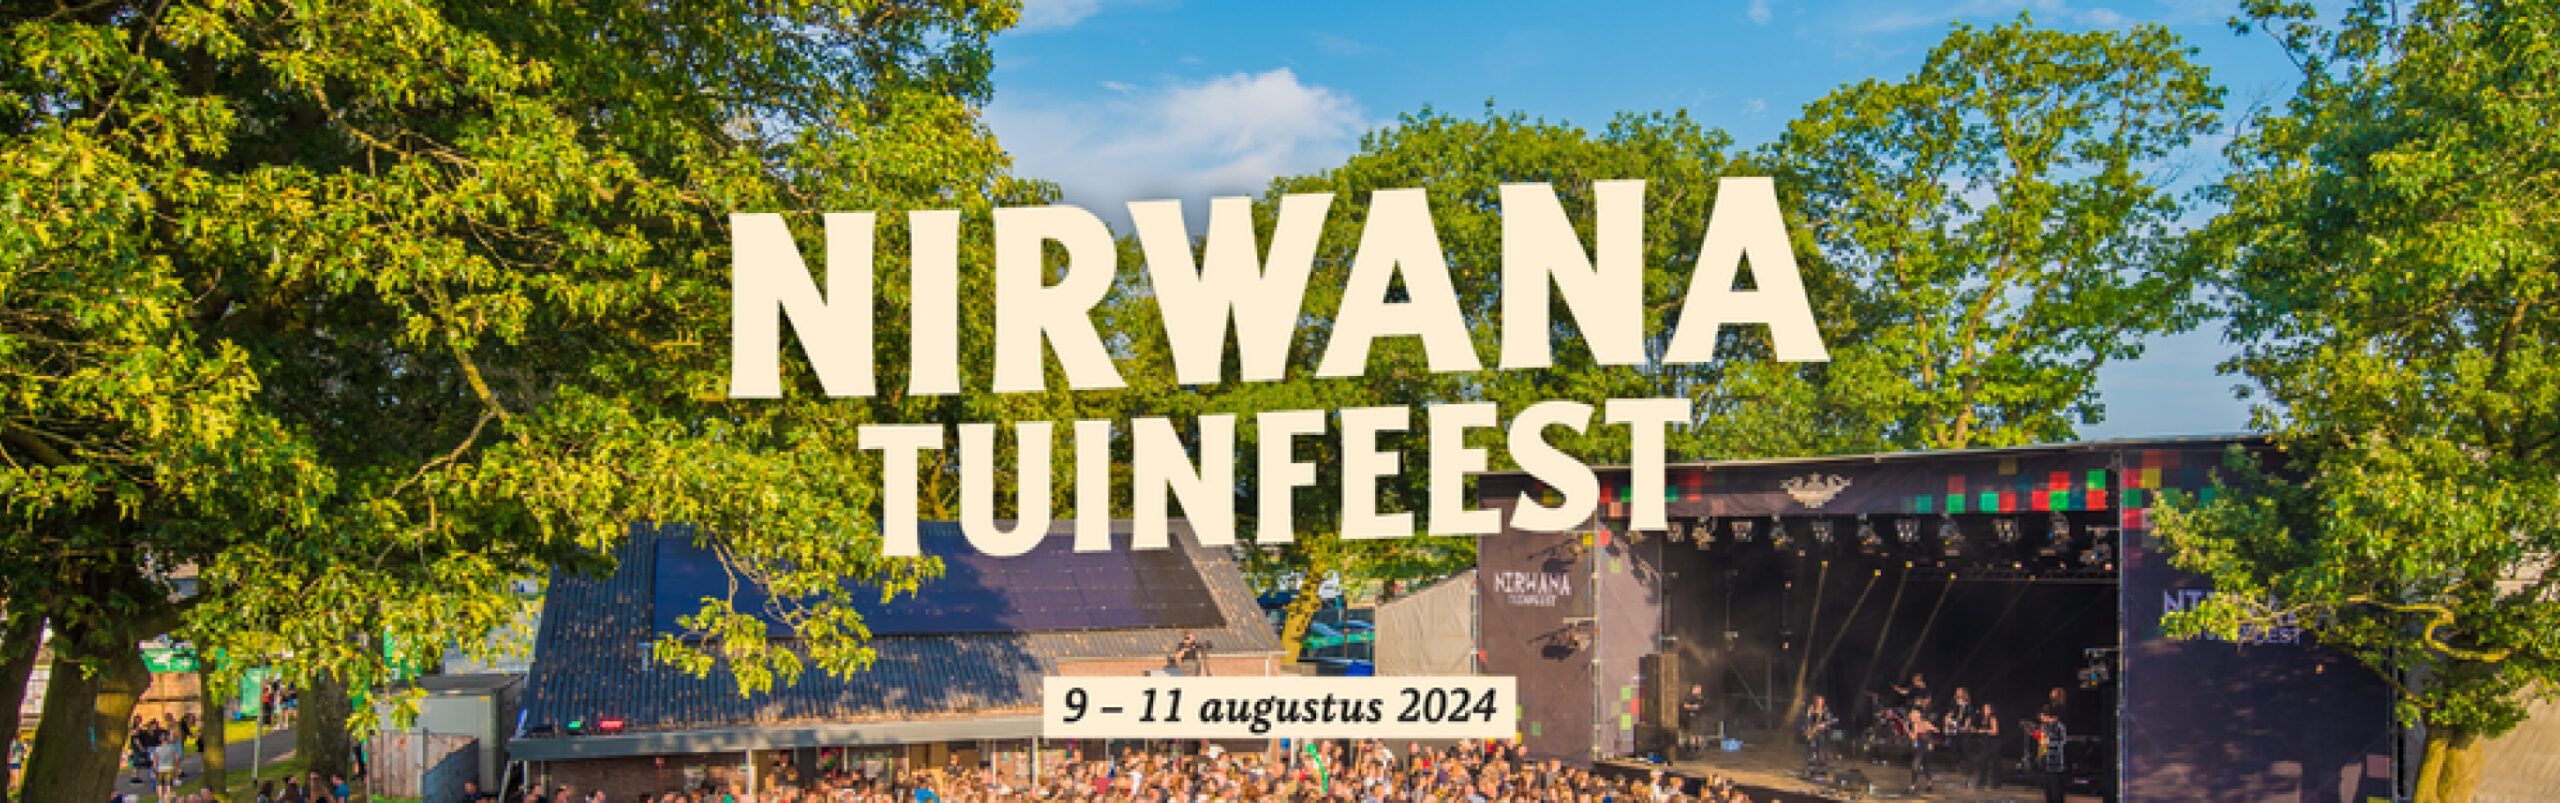 Nirwana Tuinfeest header